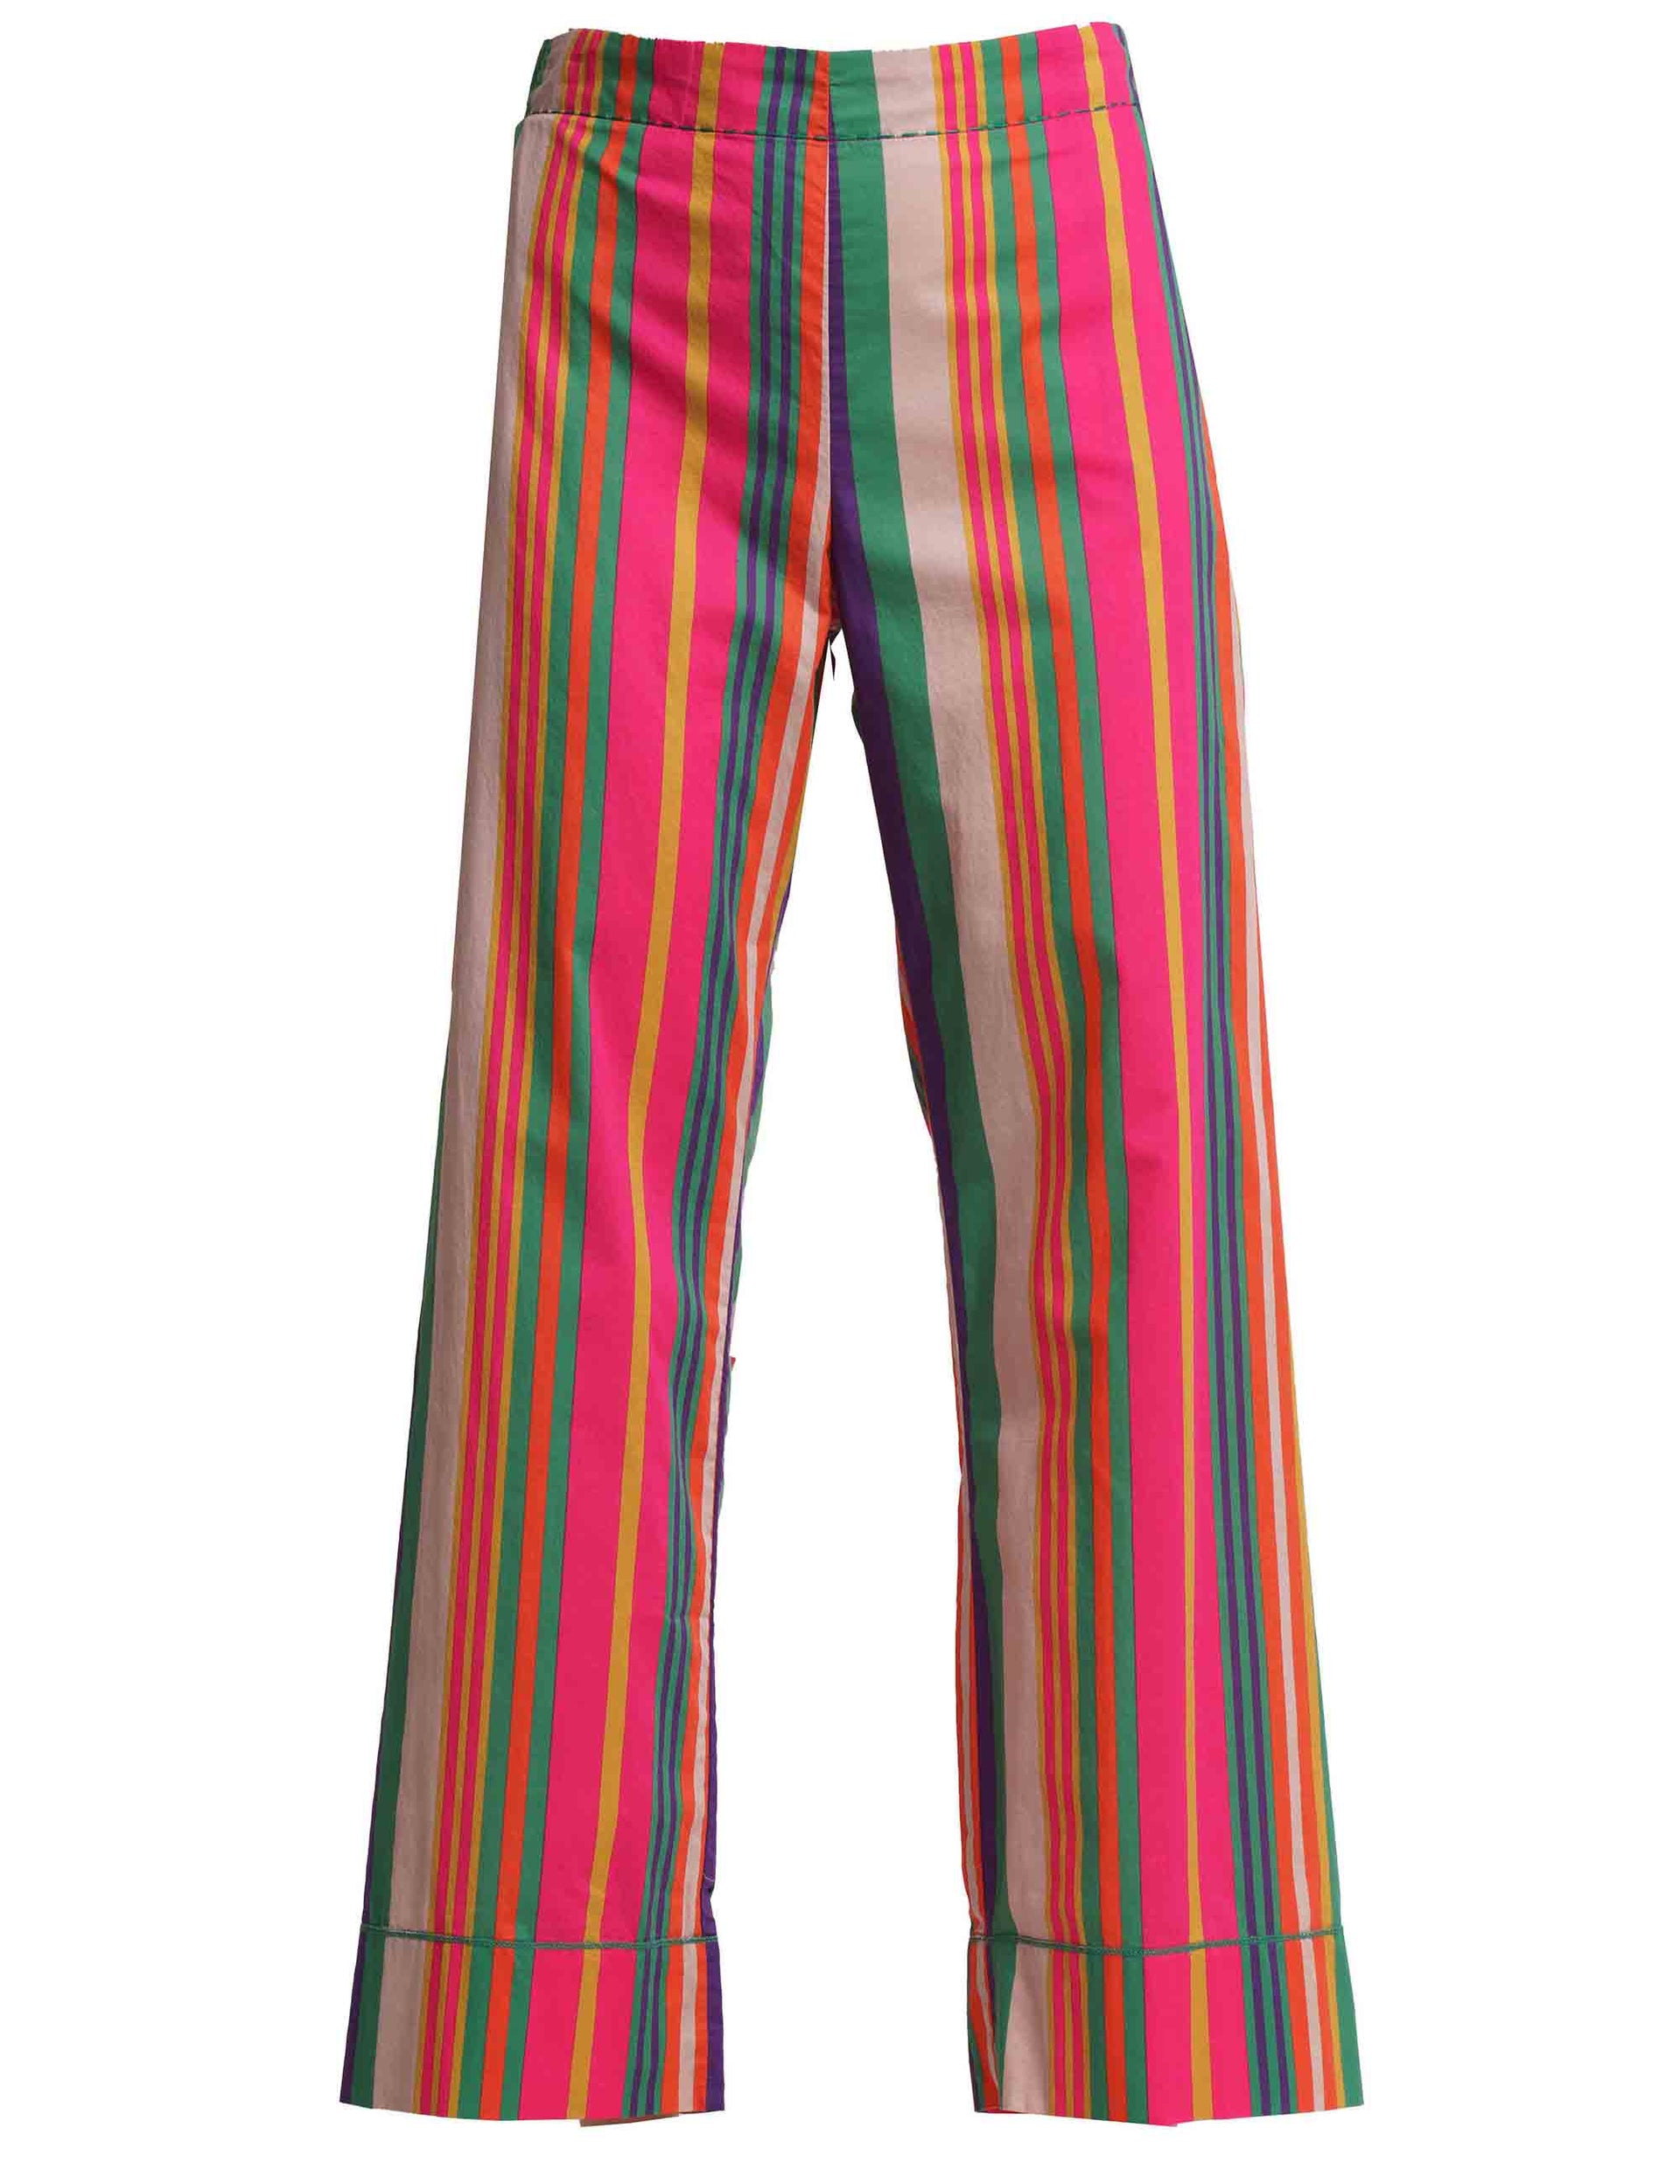 Mari Stripes Muslin women's trousers in pink patterned cotton